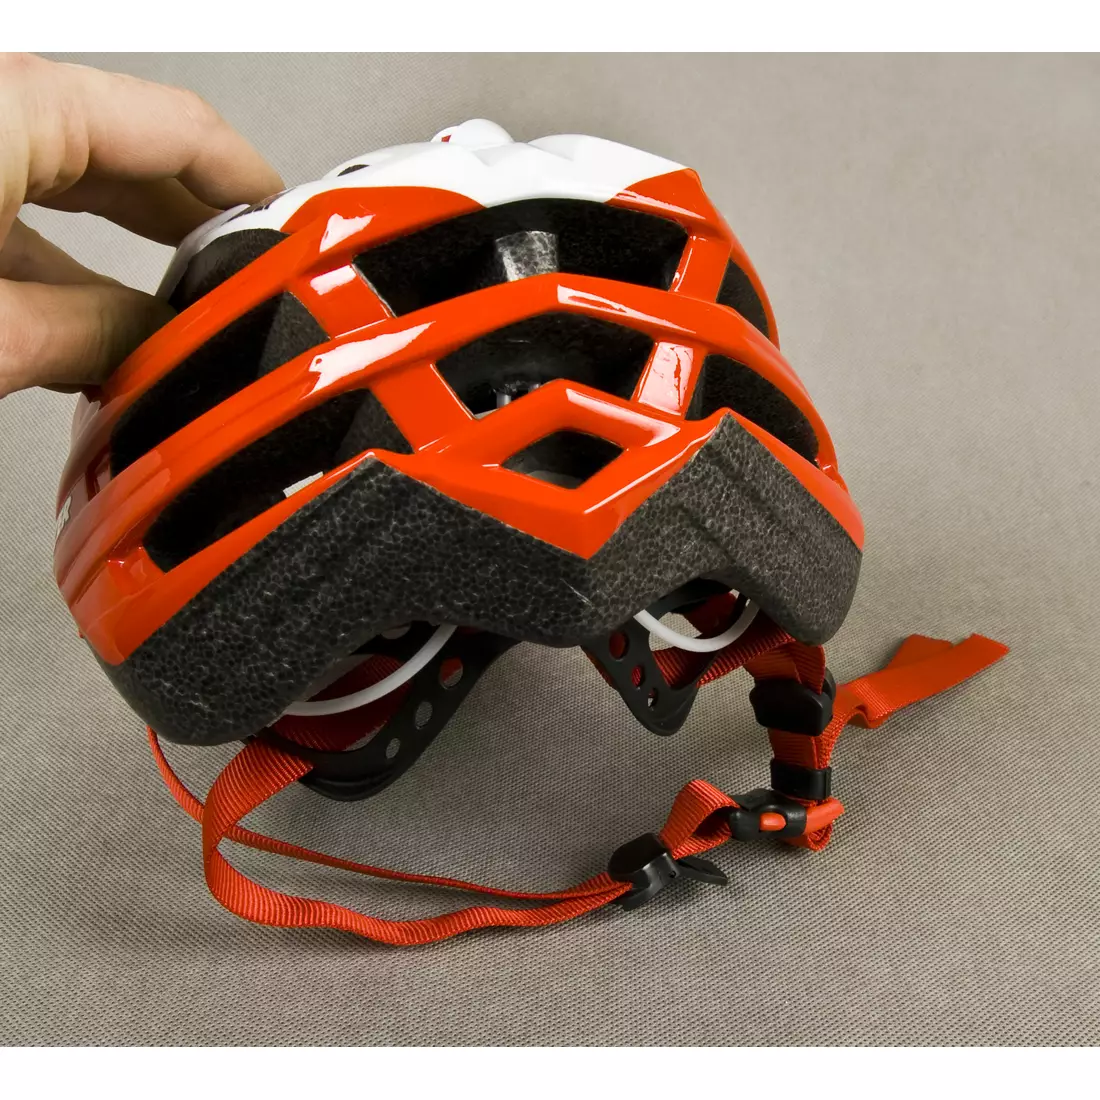 LAZER VANDAL MTB bicycle helmet red and white